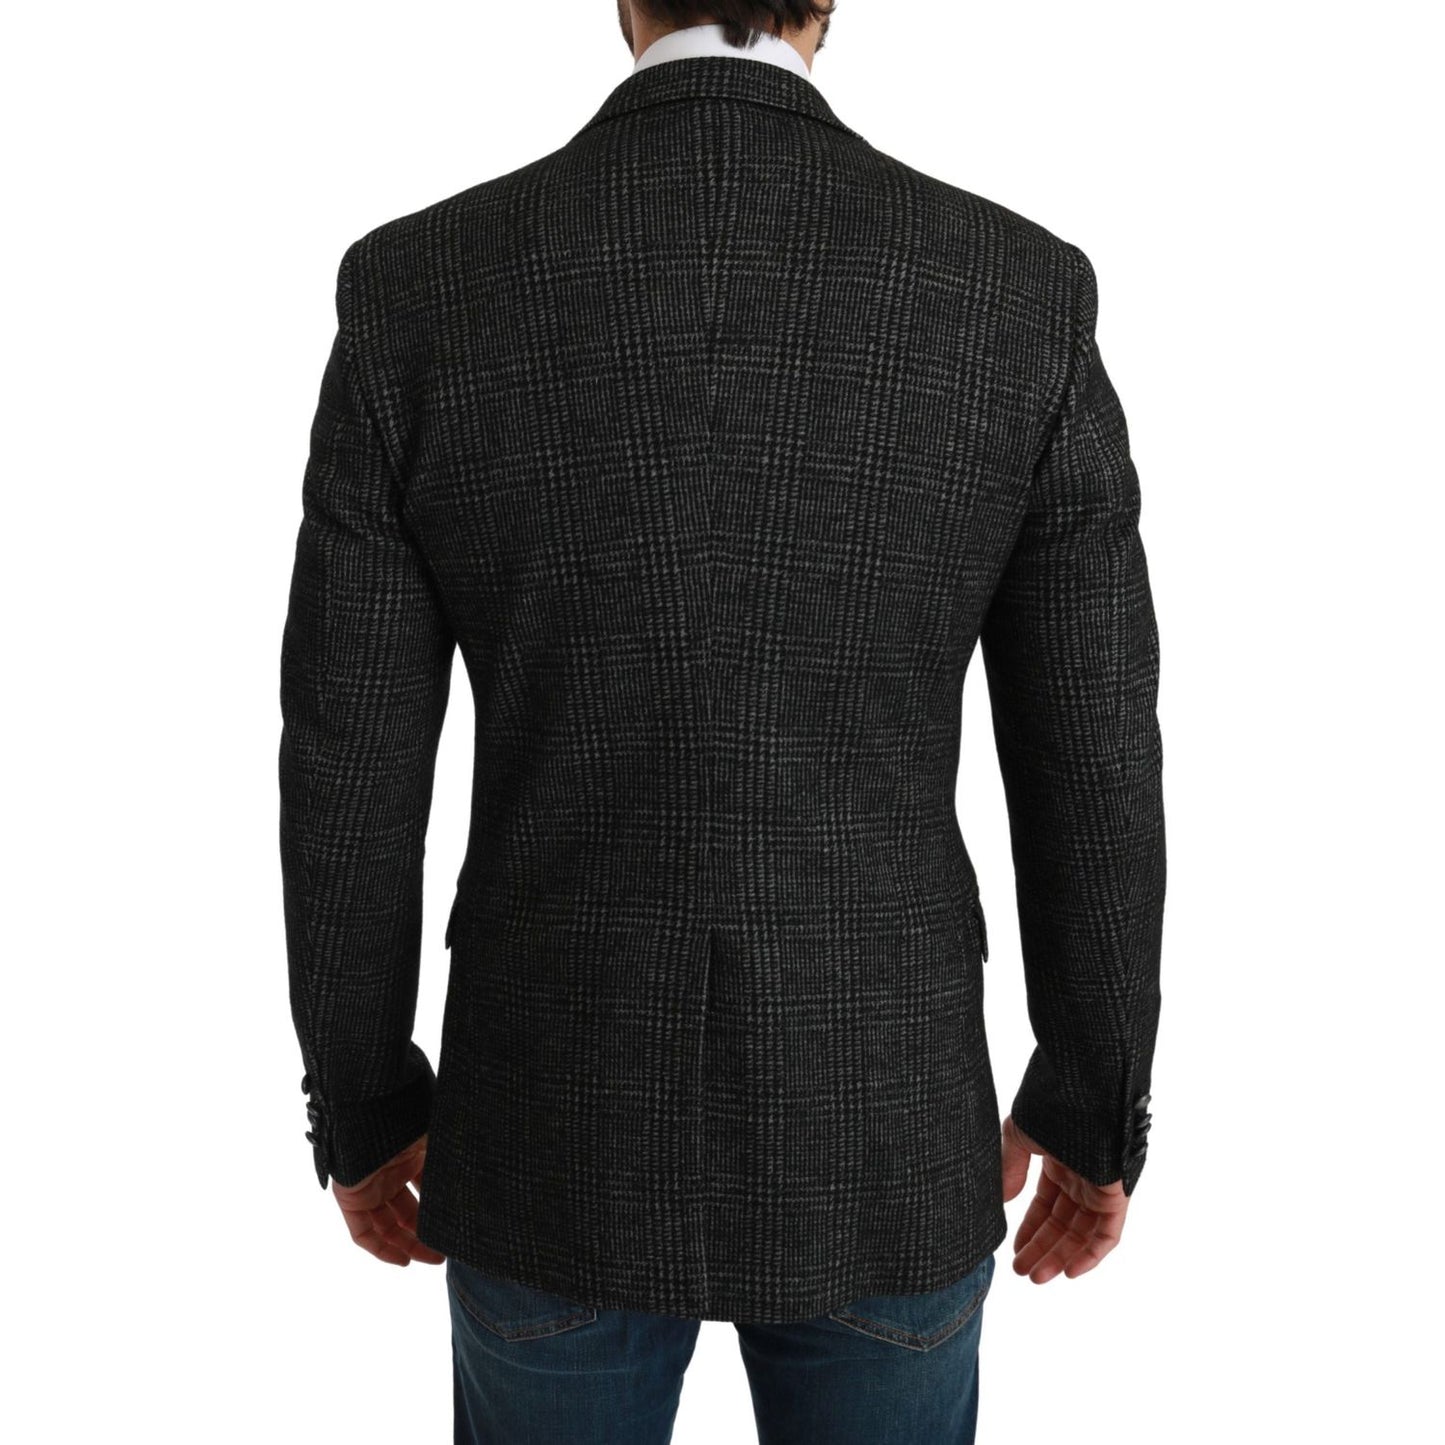 Dolce & Gabbana Elegant Gray Plaid Slim Fit Blazer gray-plaid-check-slim-fit-jacket-blazer